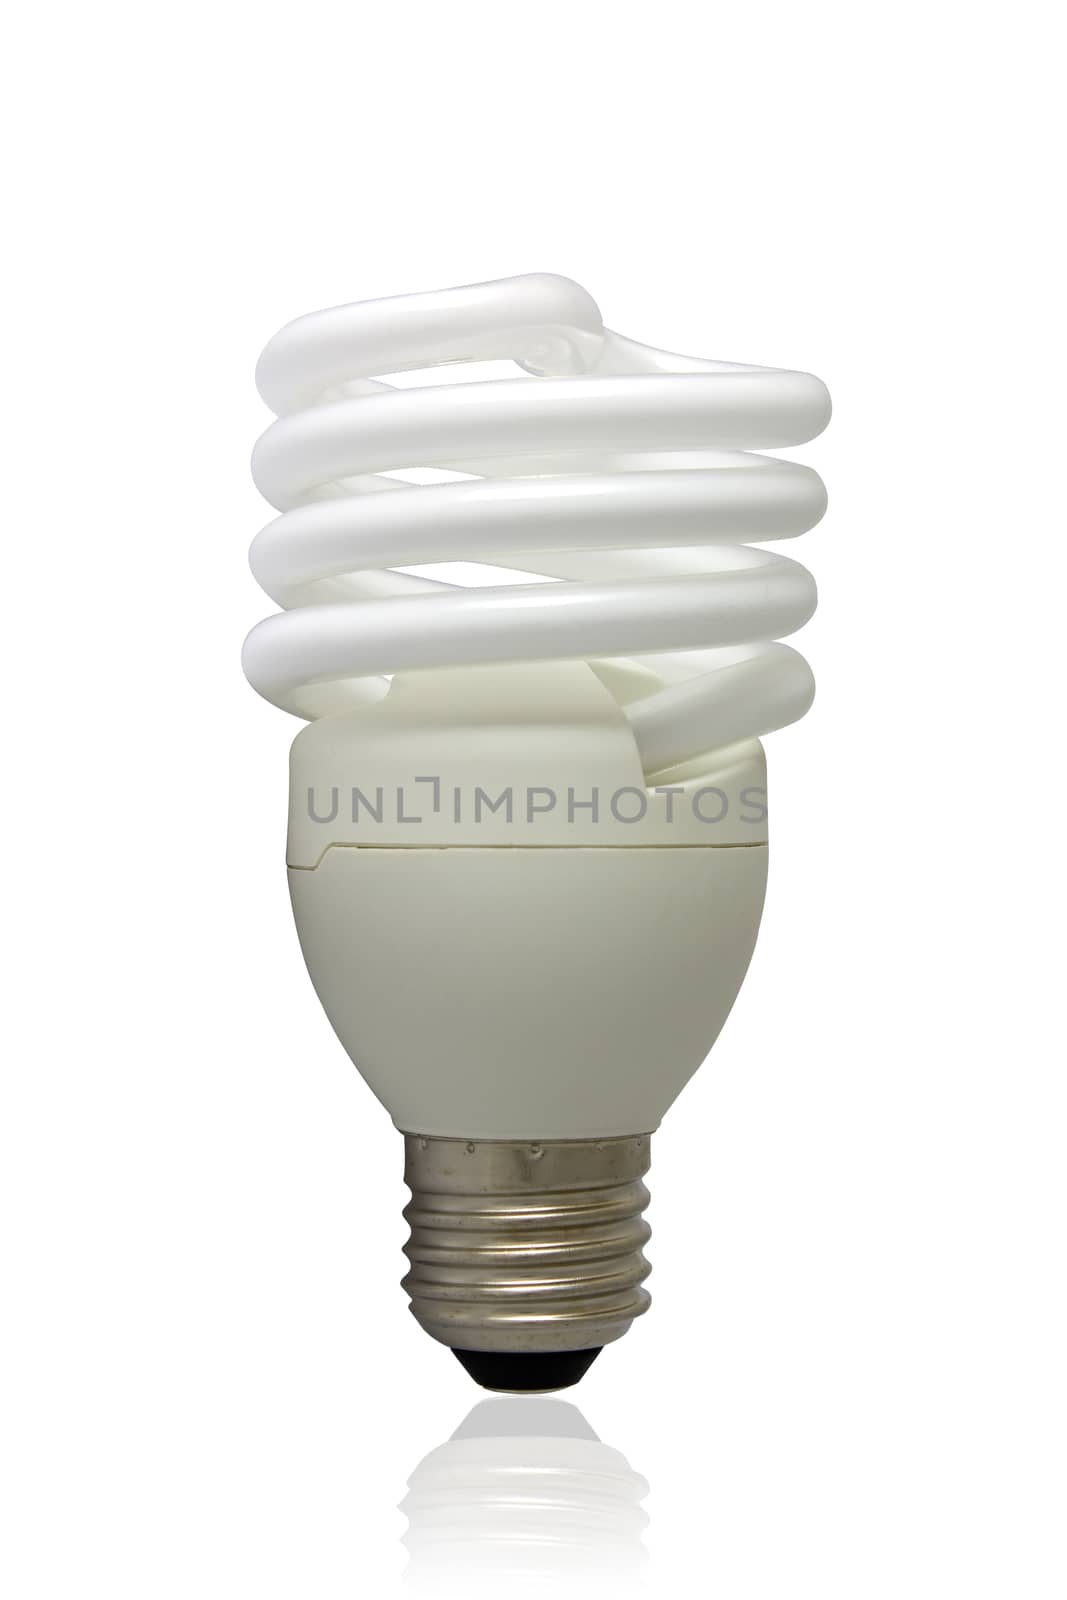 Compact Fluorescent Lightbulb on white background